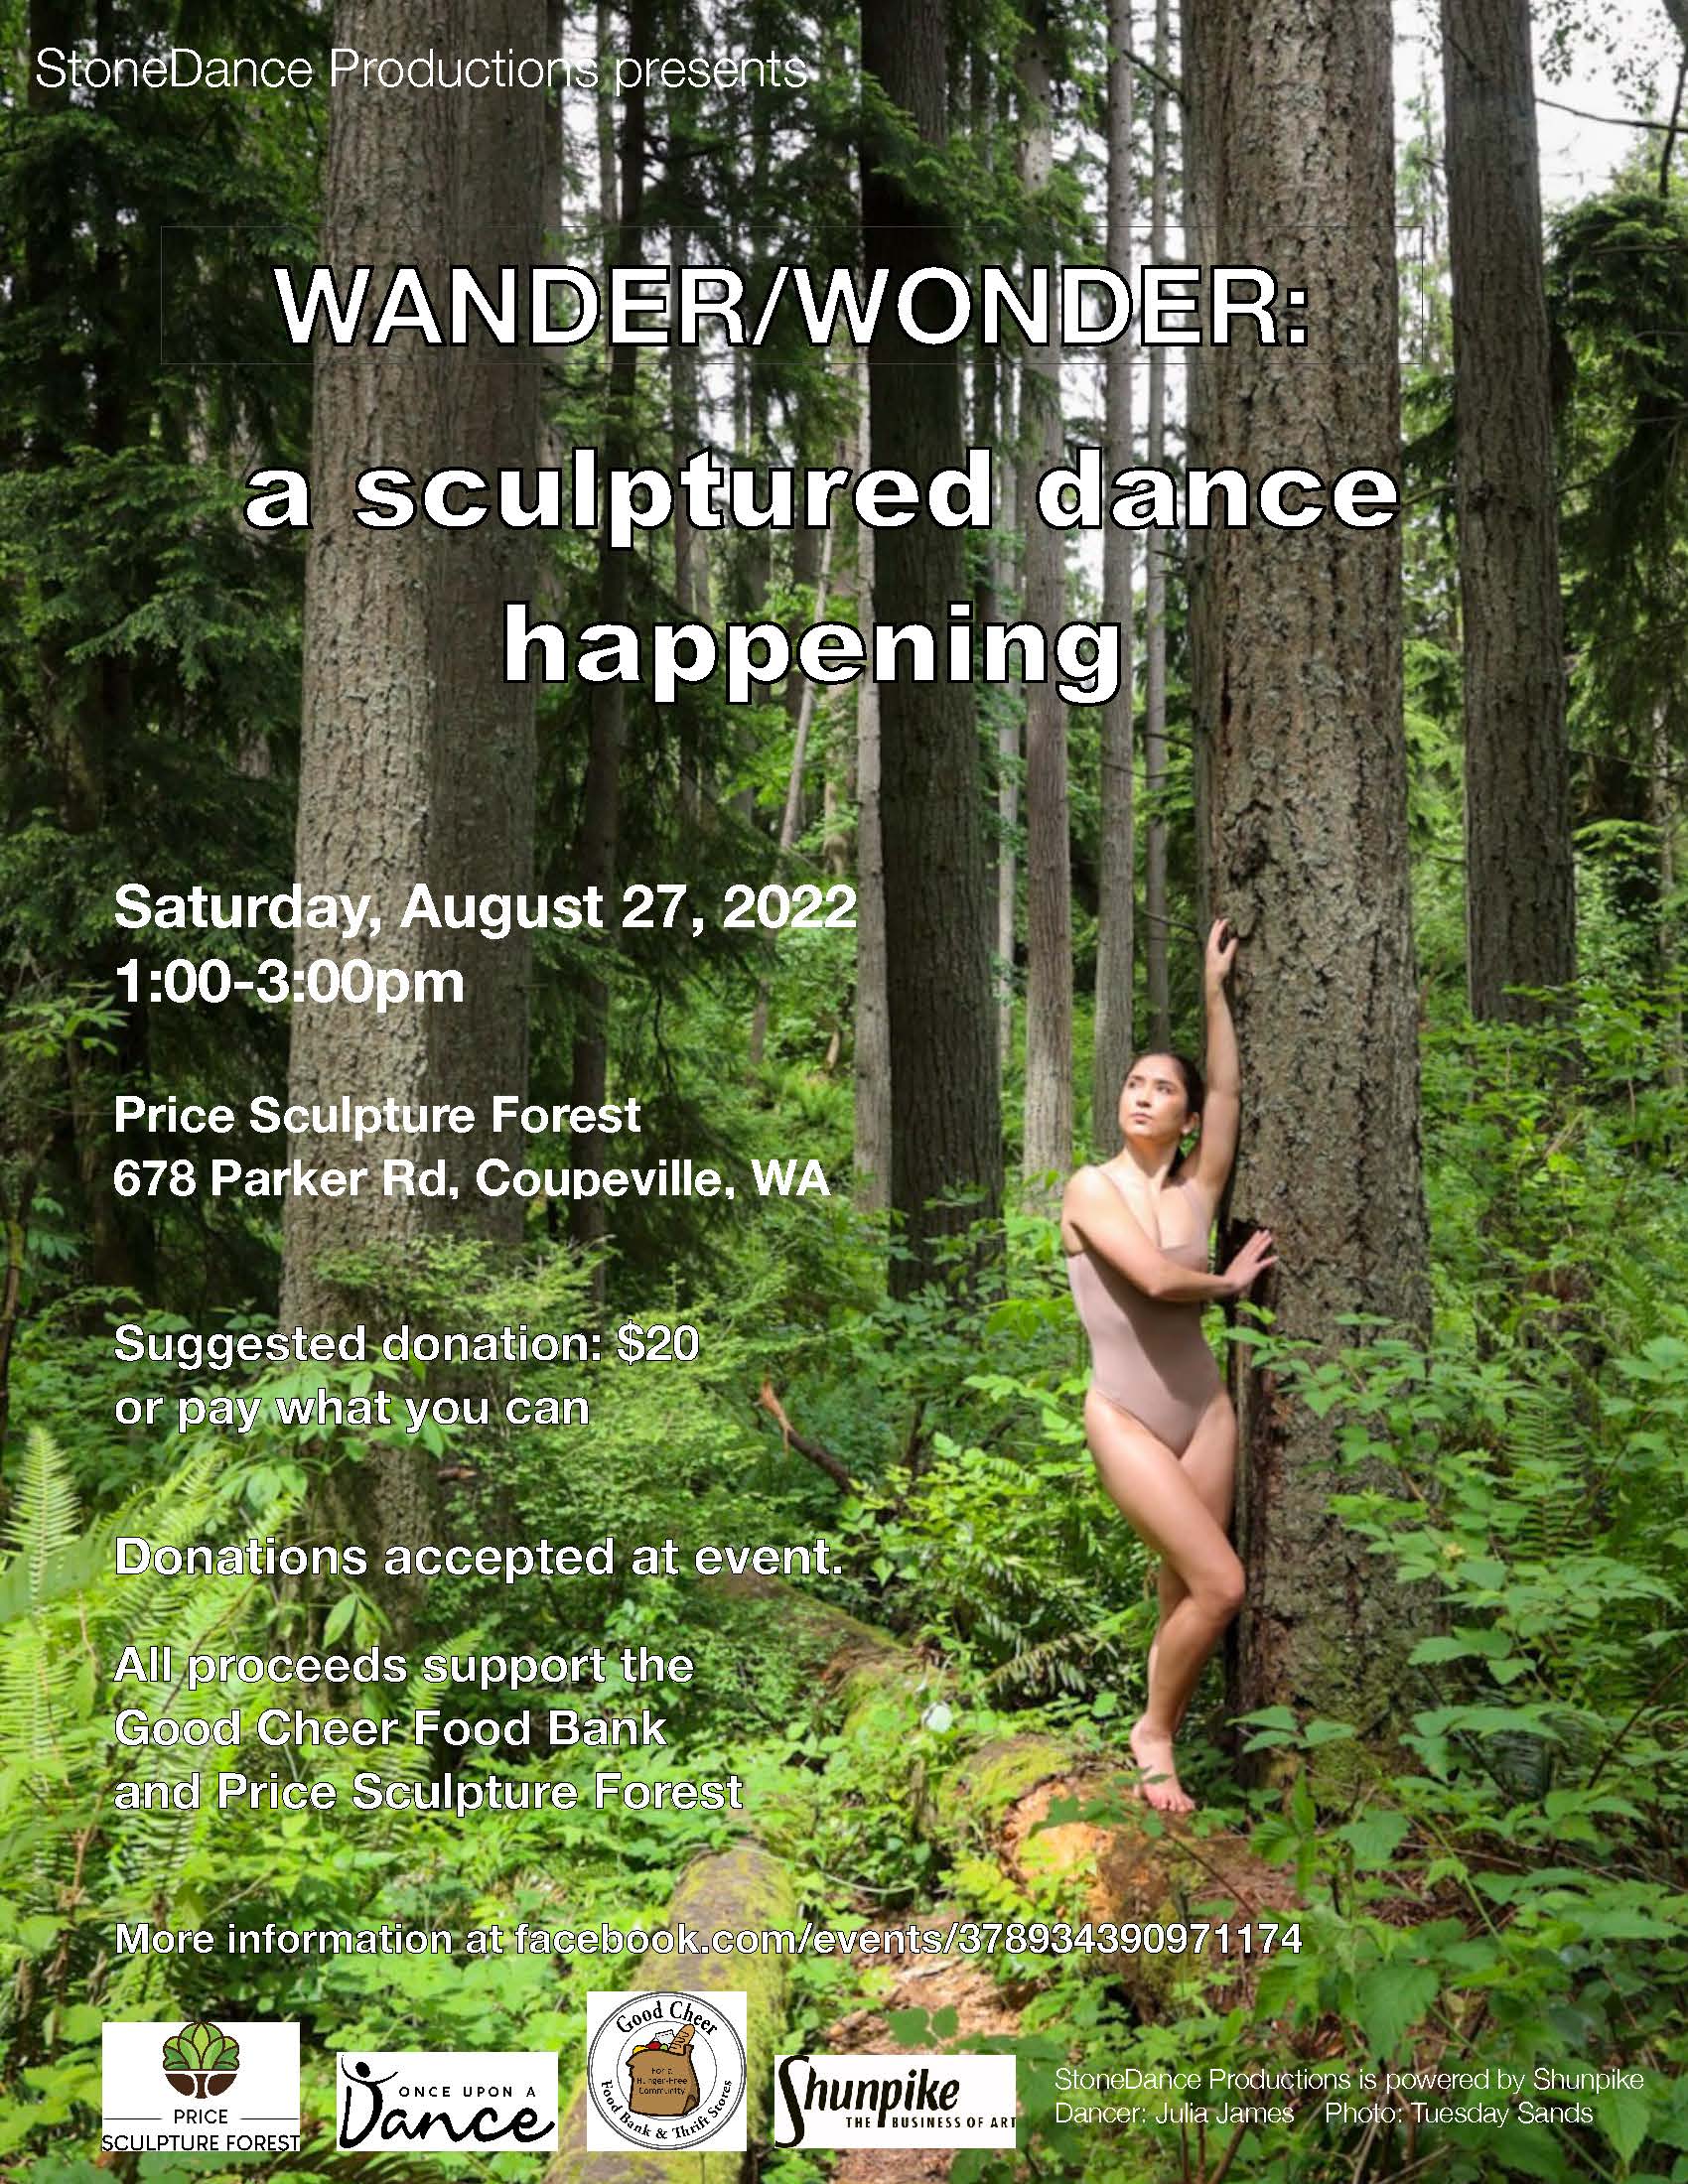 Wander/Wonder: A Sculptured Dance Happening at Price Sculpture Forest